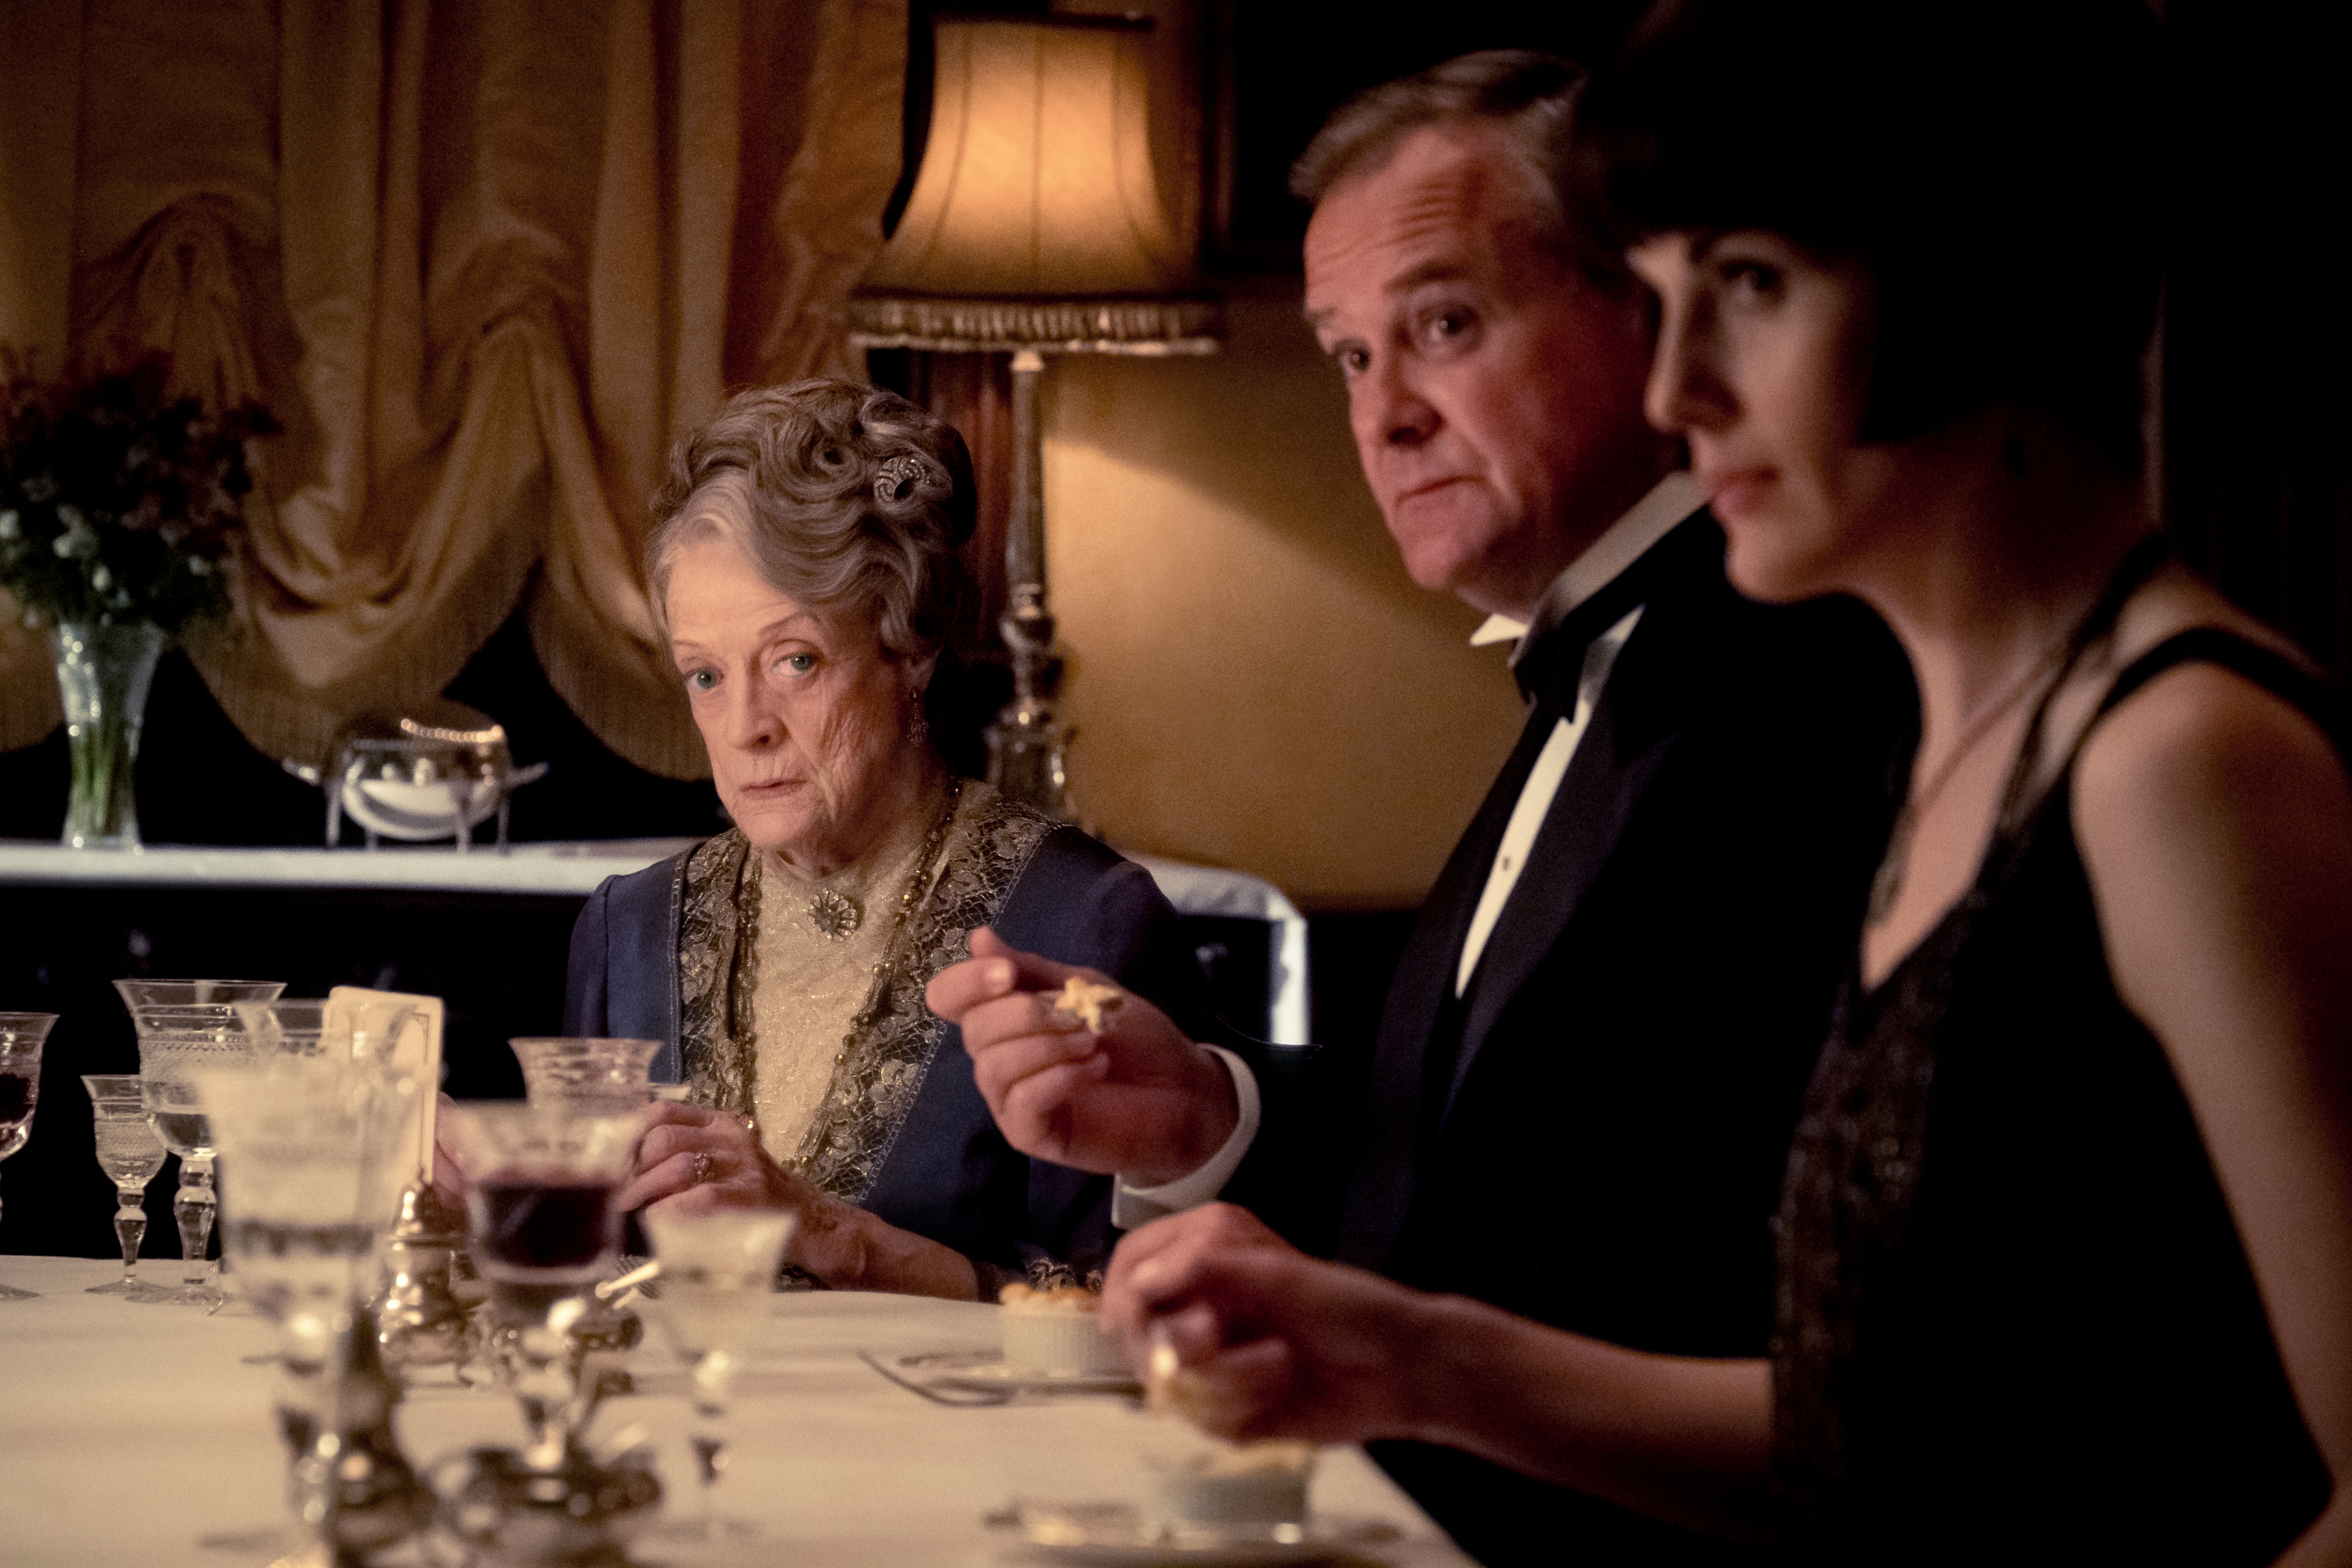 Baixar papel de parede para celular de Filme, Downton Abbey gratuito.